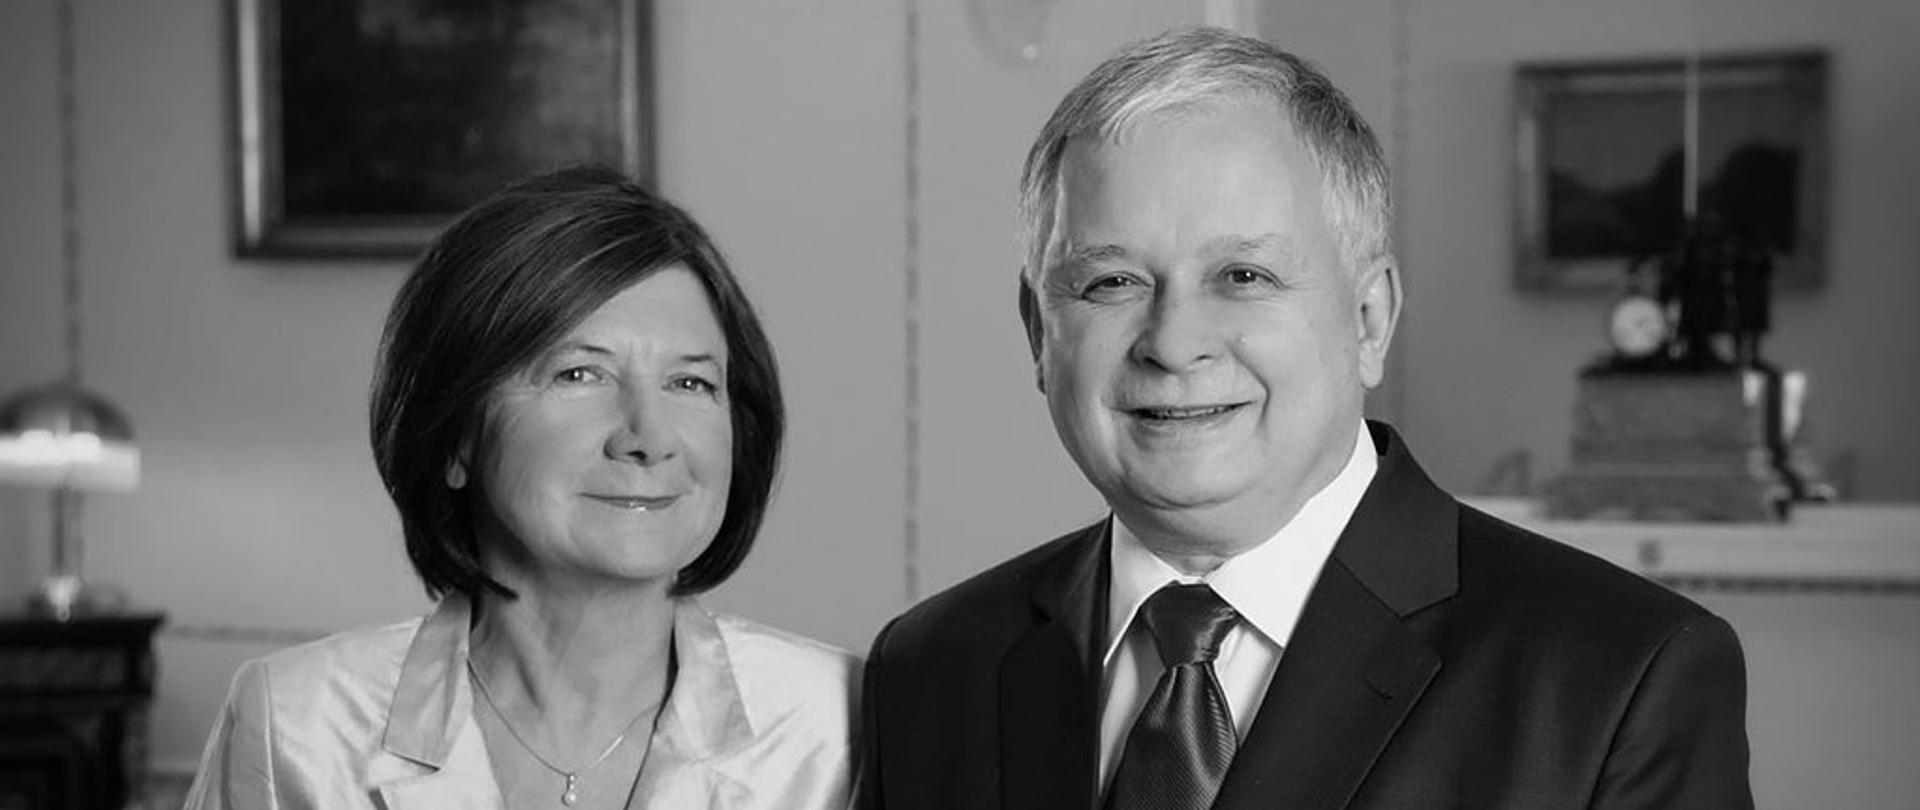 Prezydent Lech Kaczyński i małżonka